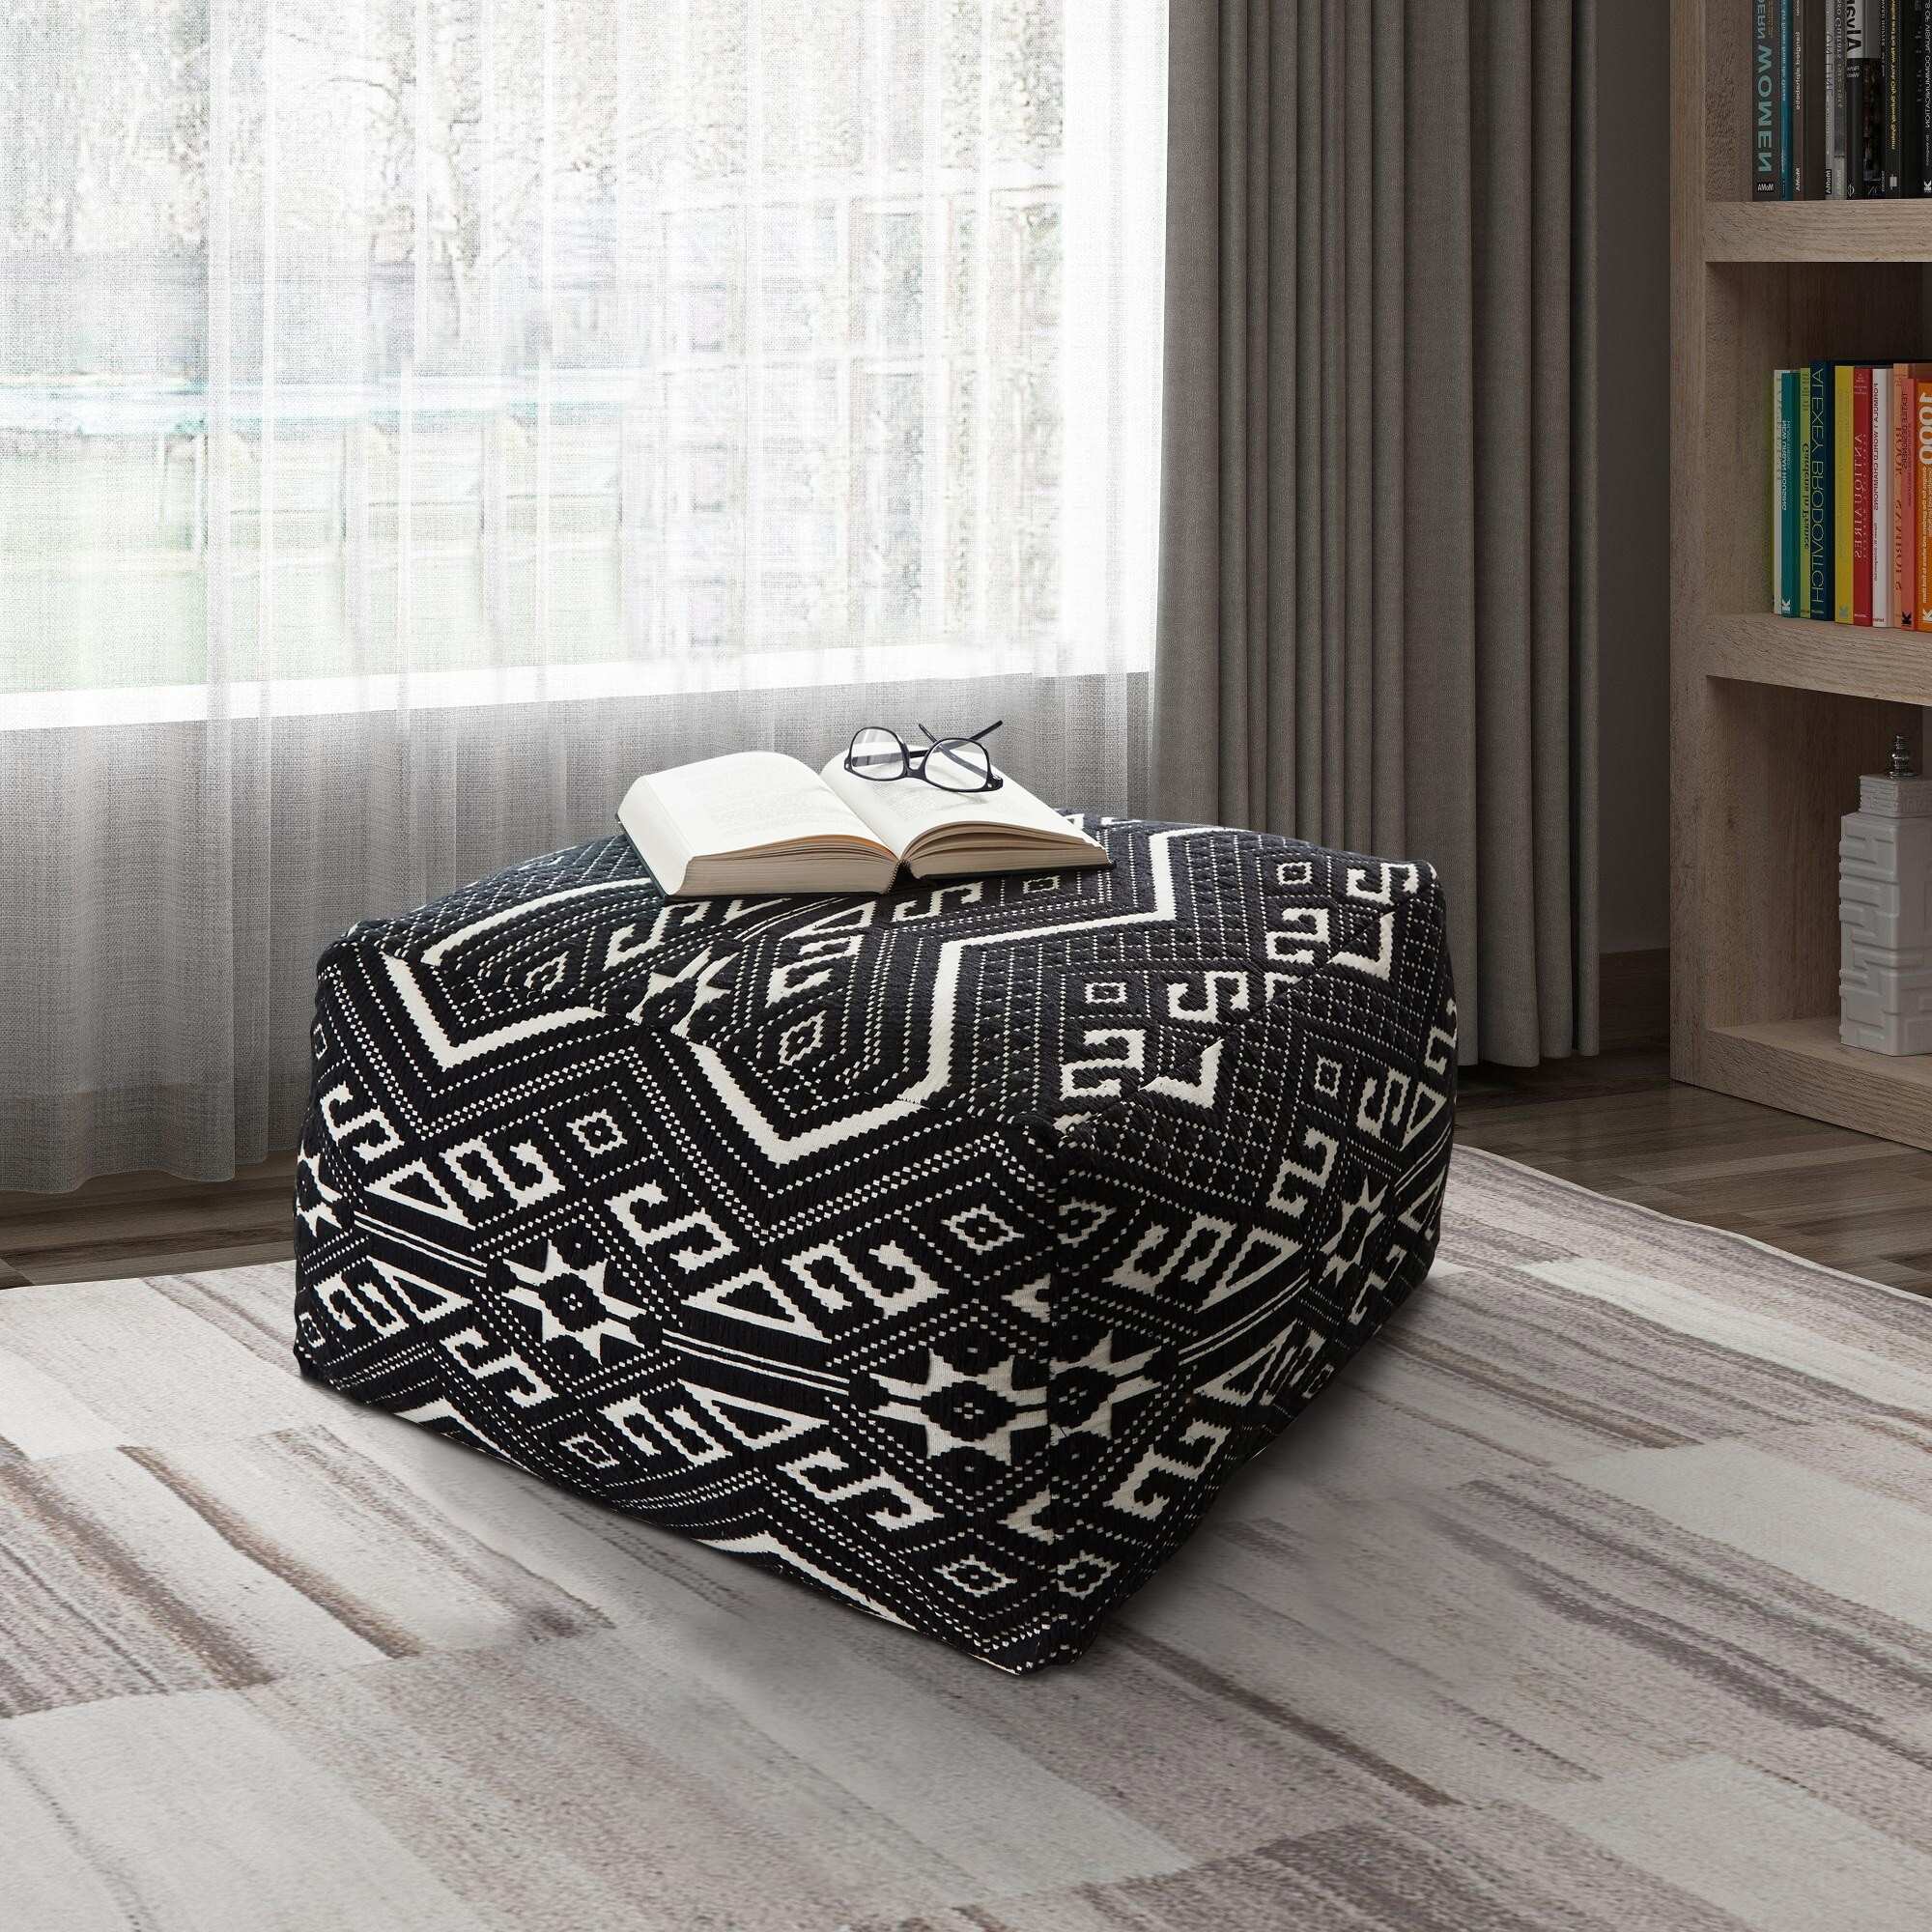 Ben 24 Inch Floor Pouf Ottoman, Cushioned Seat, Woven Cotton, Black, White